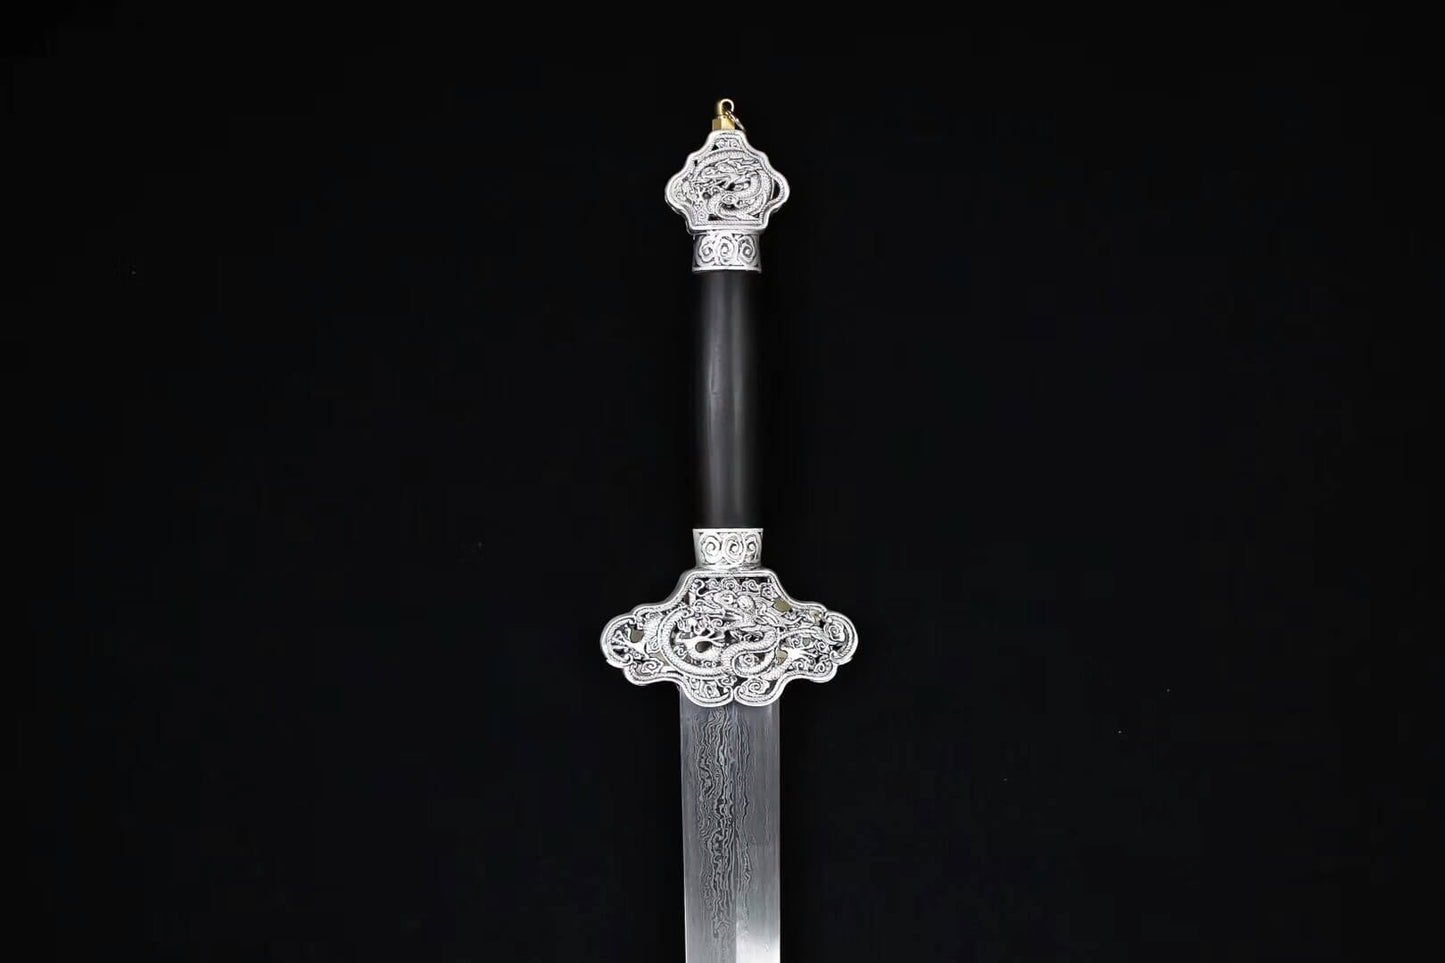 Yunlong jian,Folding pattern steel blade,Alloy fitting,Black scabbard - Chinese sword shop